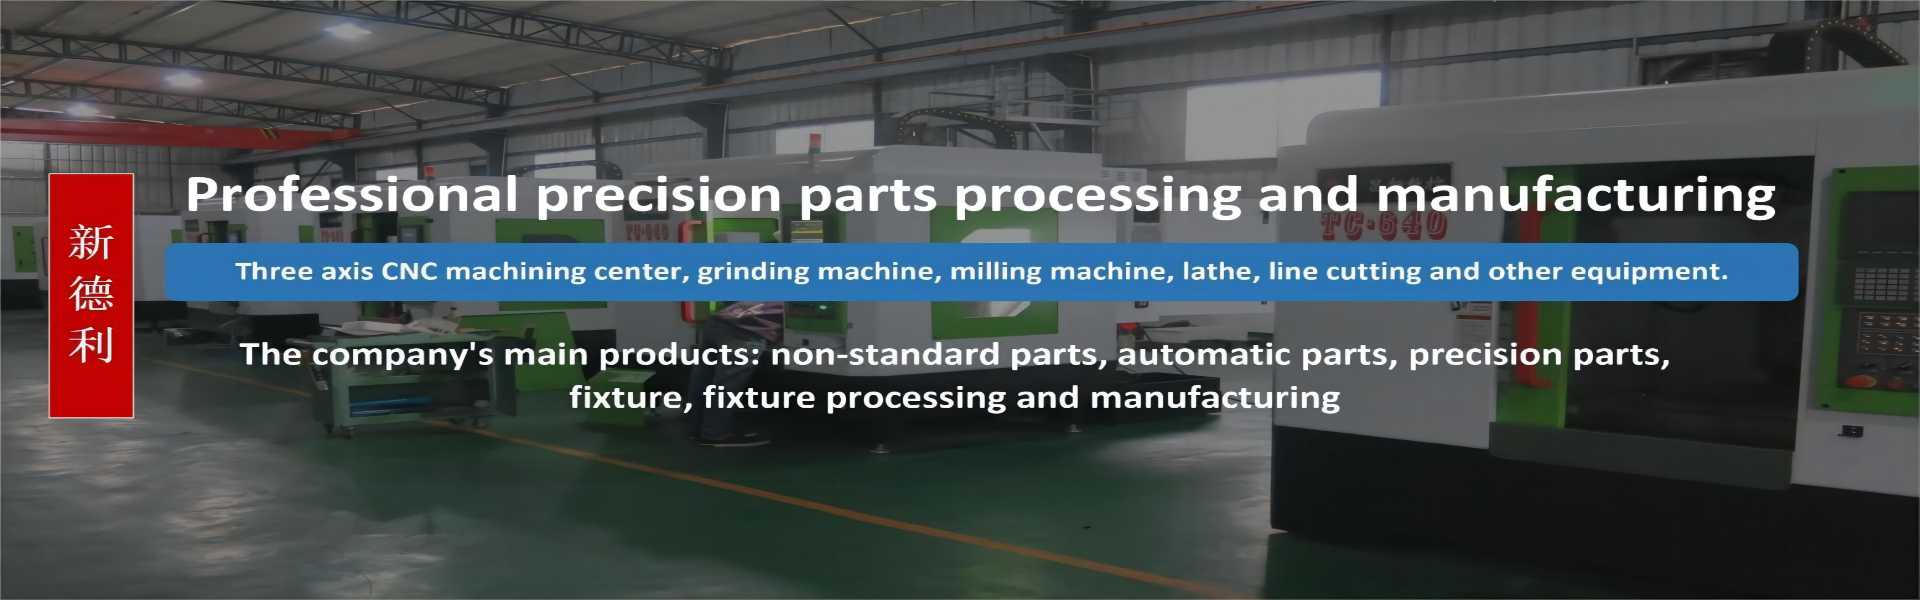 Non-standard parts processing,Automatic parts processing,Mechanical parts processing,Dongguan Xindeli Technology Co., LTD